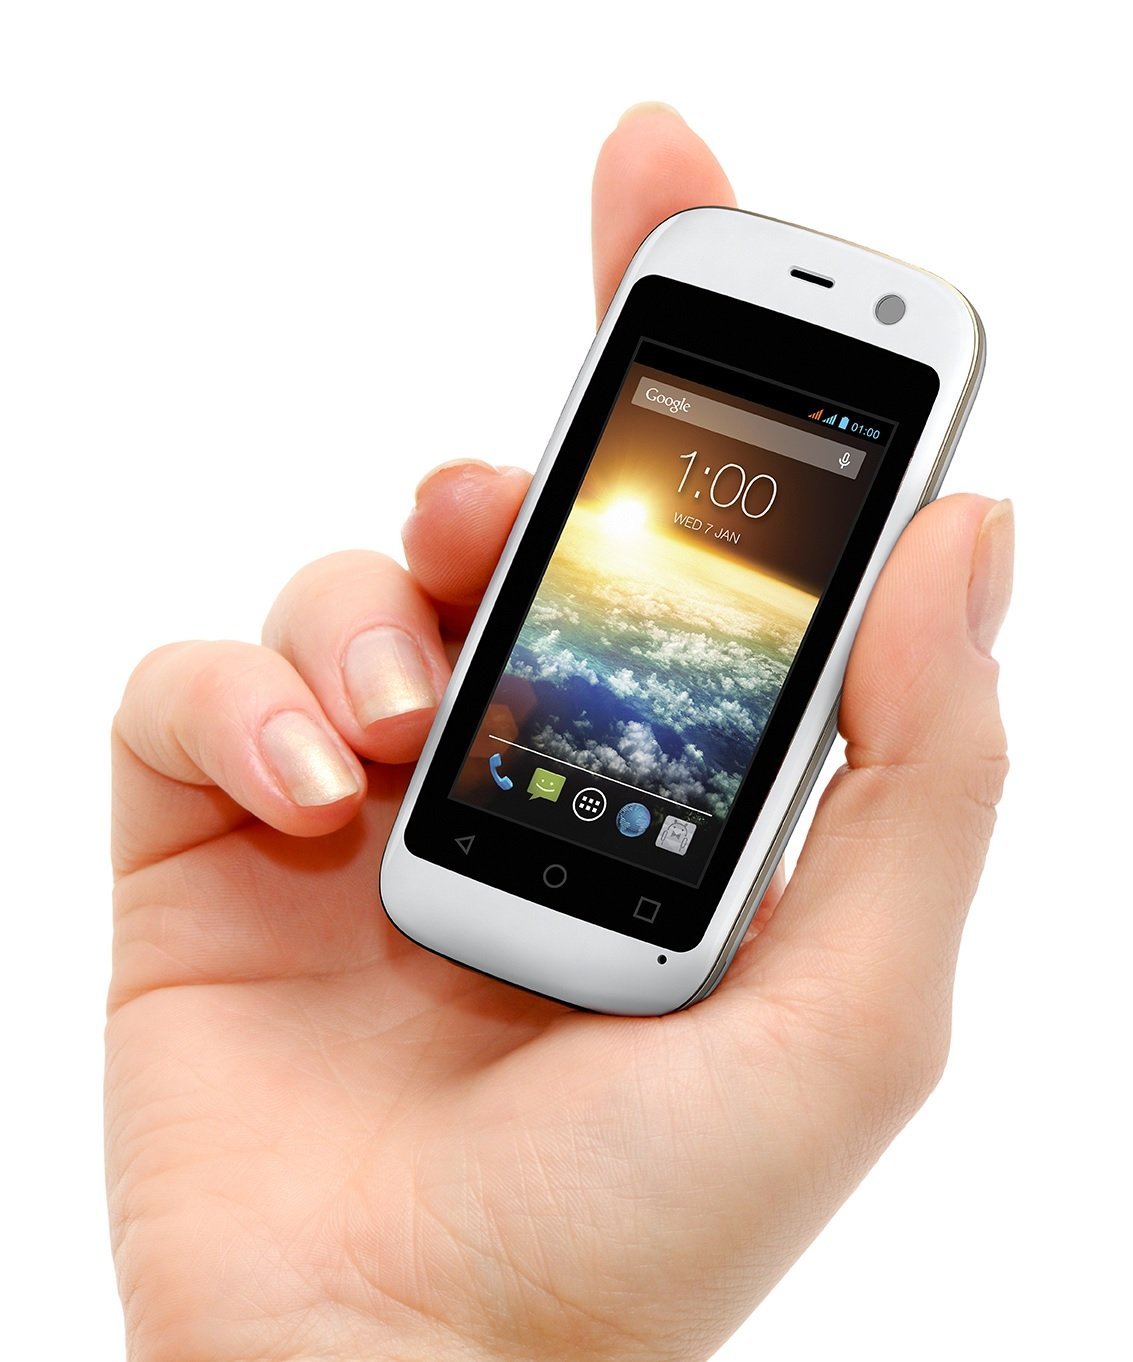 Купить телефон заказ. Posh Micro x s240. Fly s240. Posh mobile Micro x s240. Мини андроид смартфон 4g.